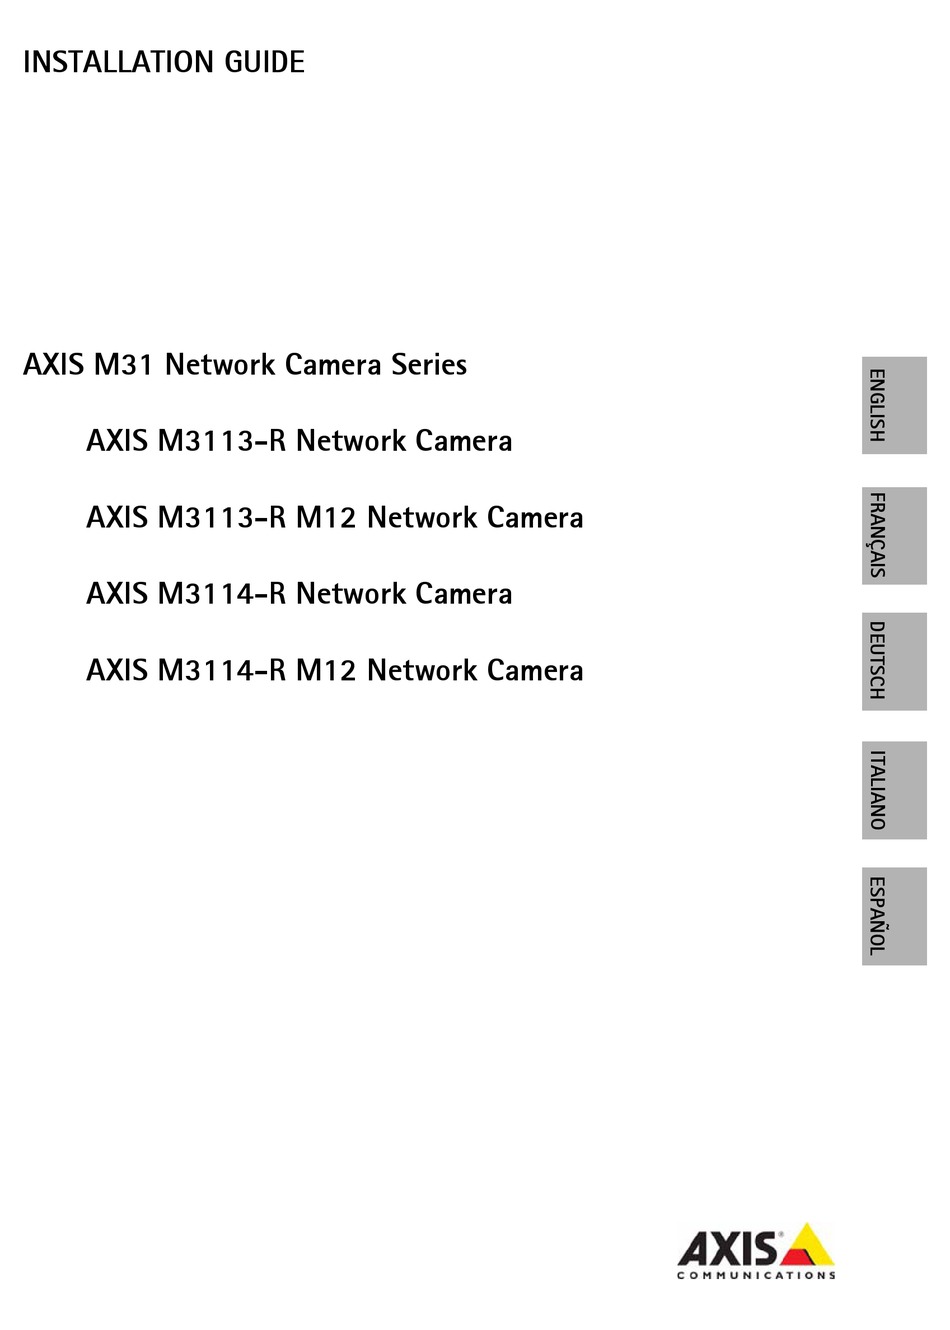 AXIS M3113-R INSTALLATION MANUAL Pdf Download | ManualsLib